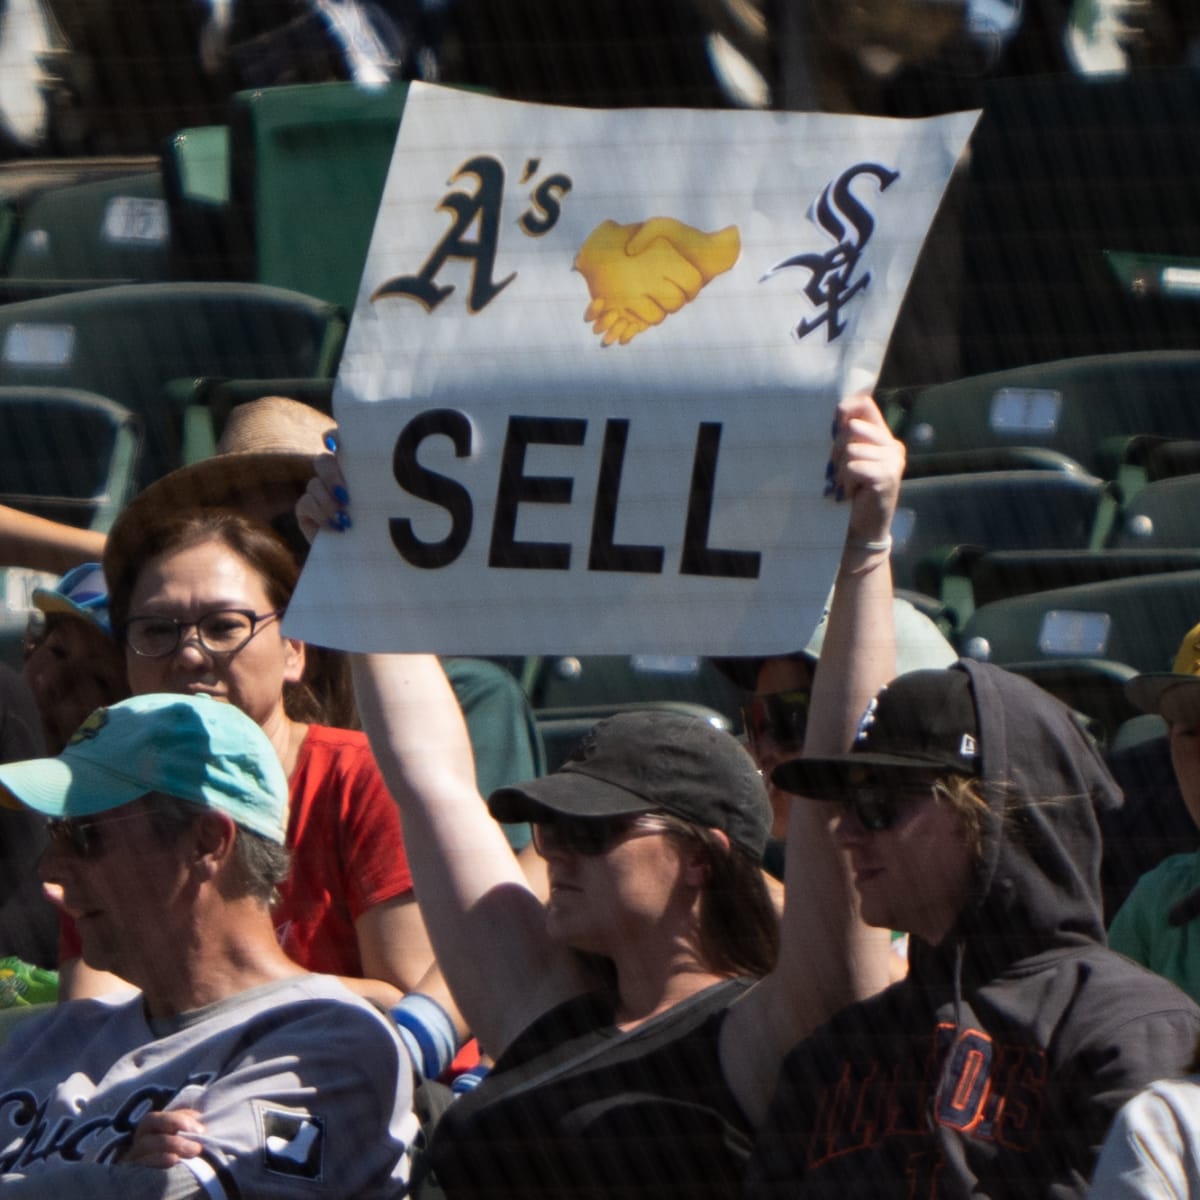 White Sox Fans Planning Reverse Boycott When A's Visit; An